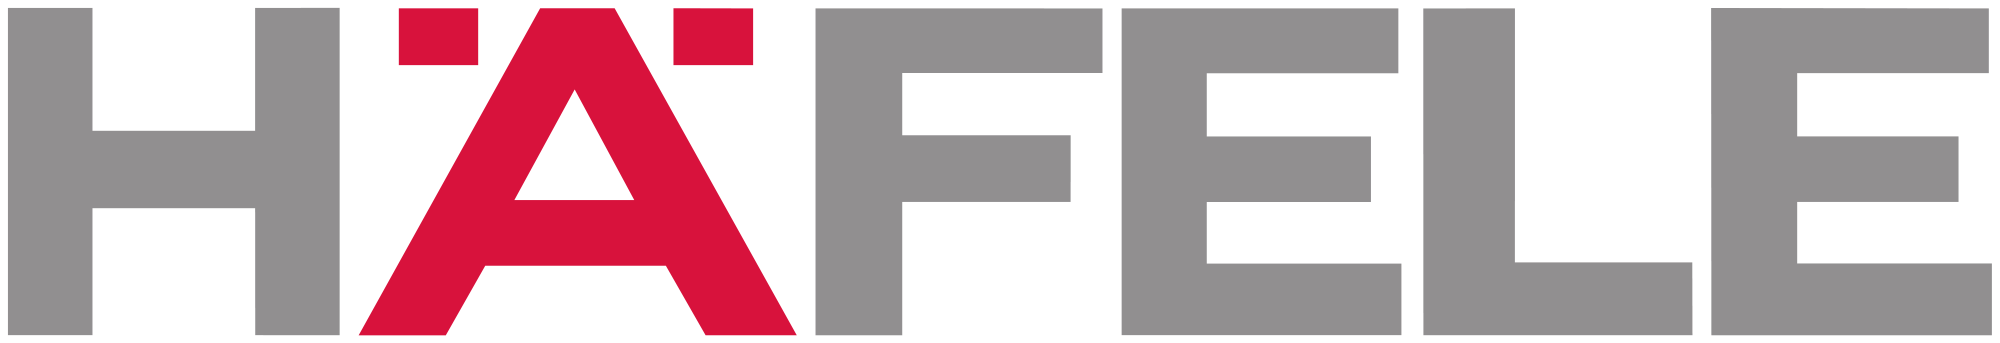 Haefele Logo